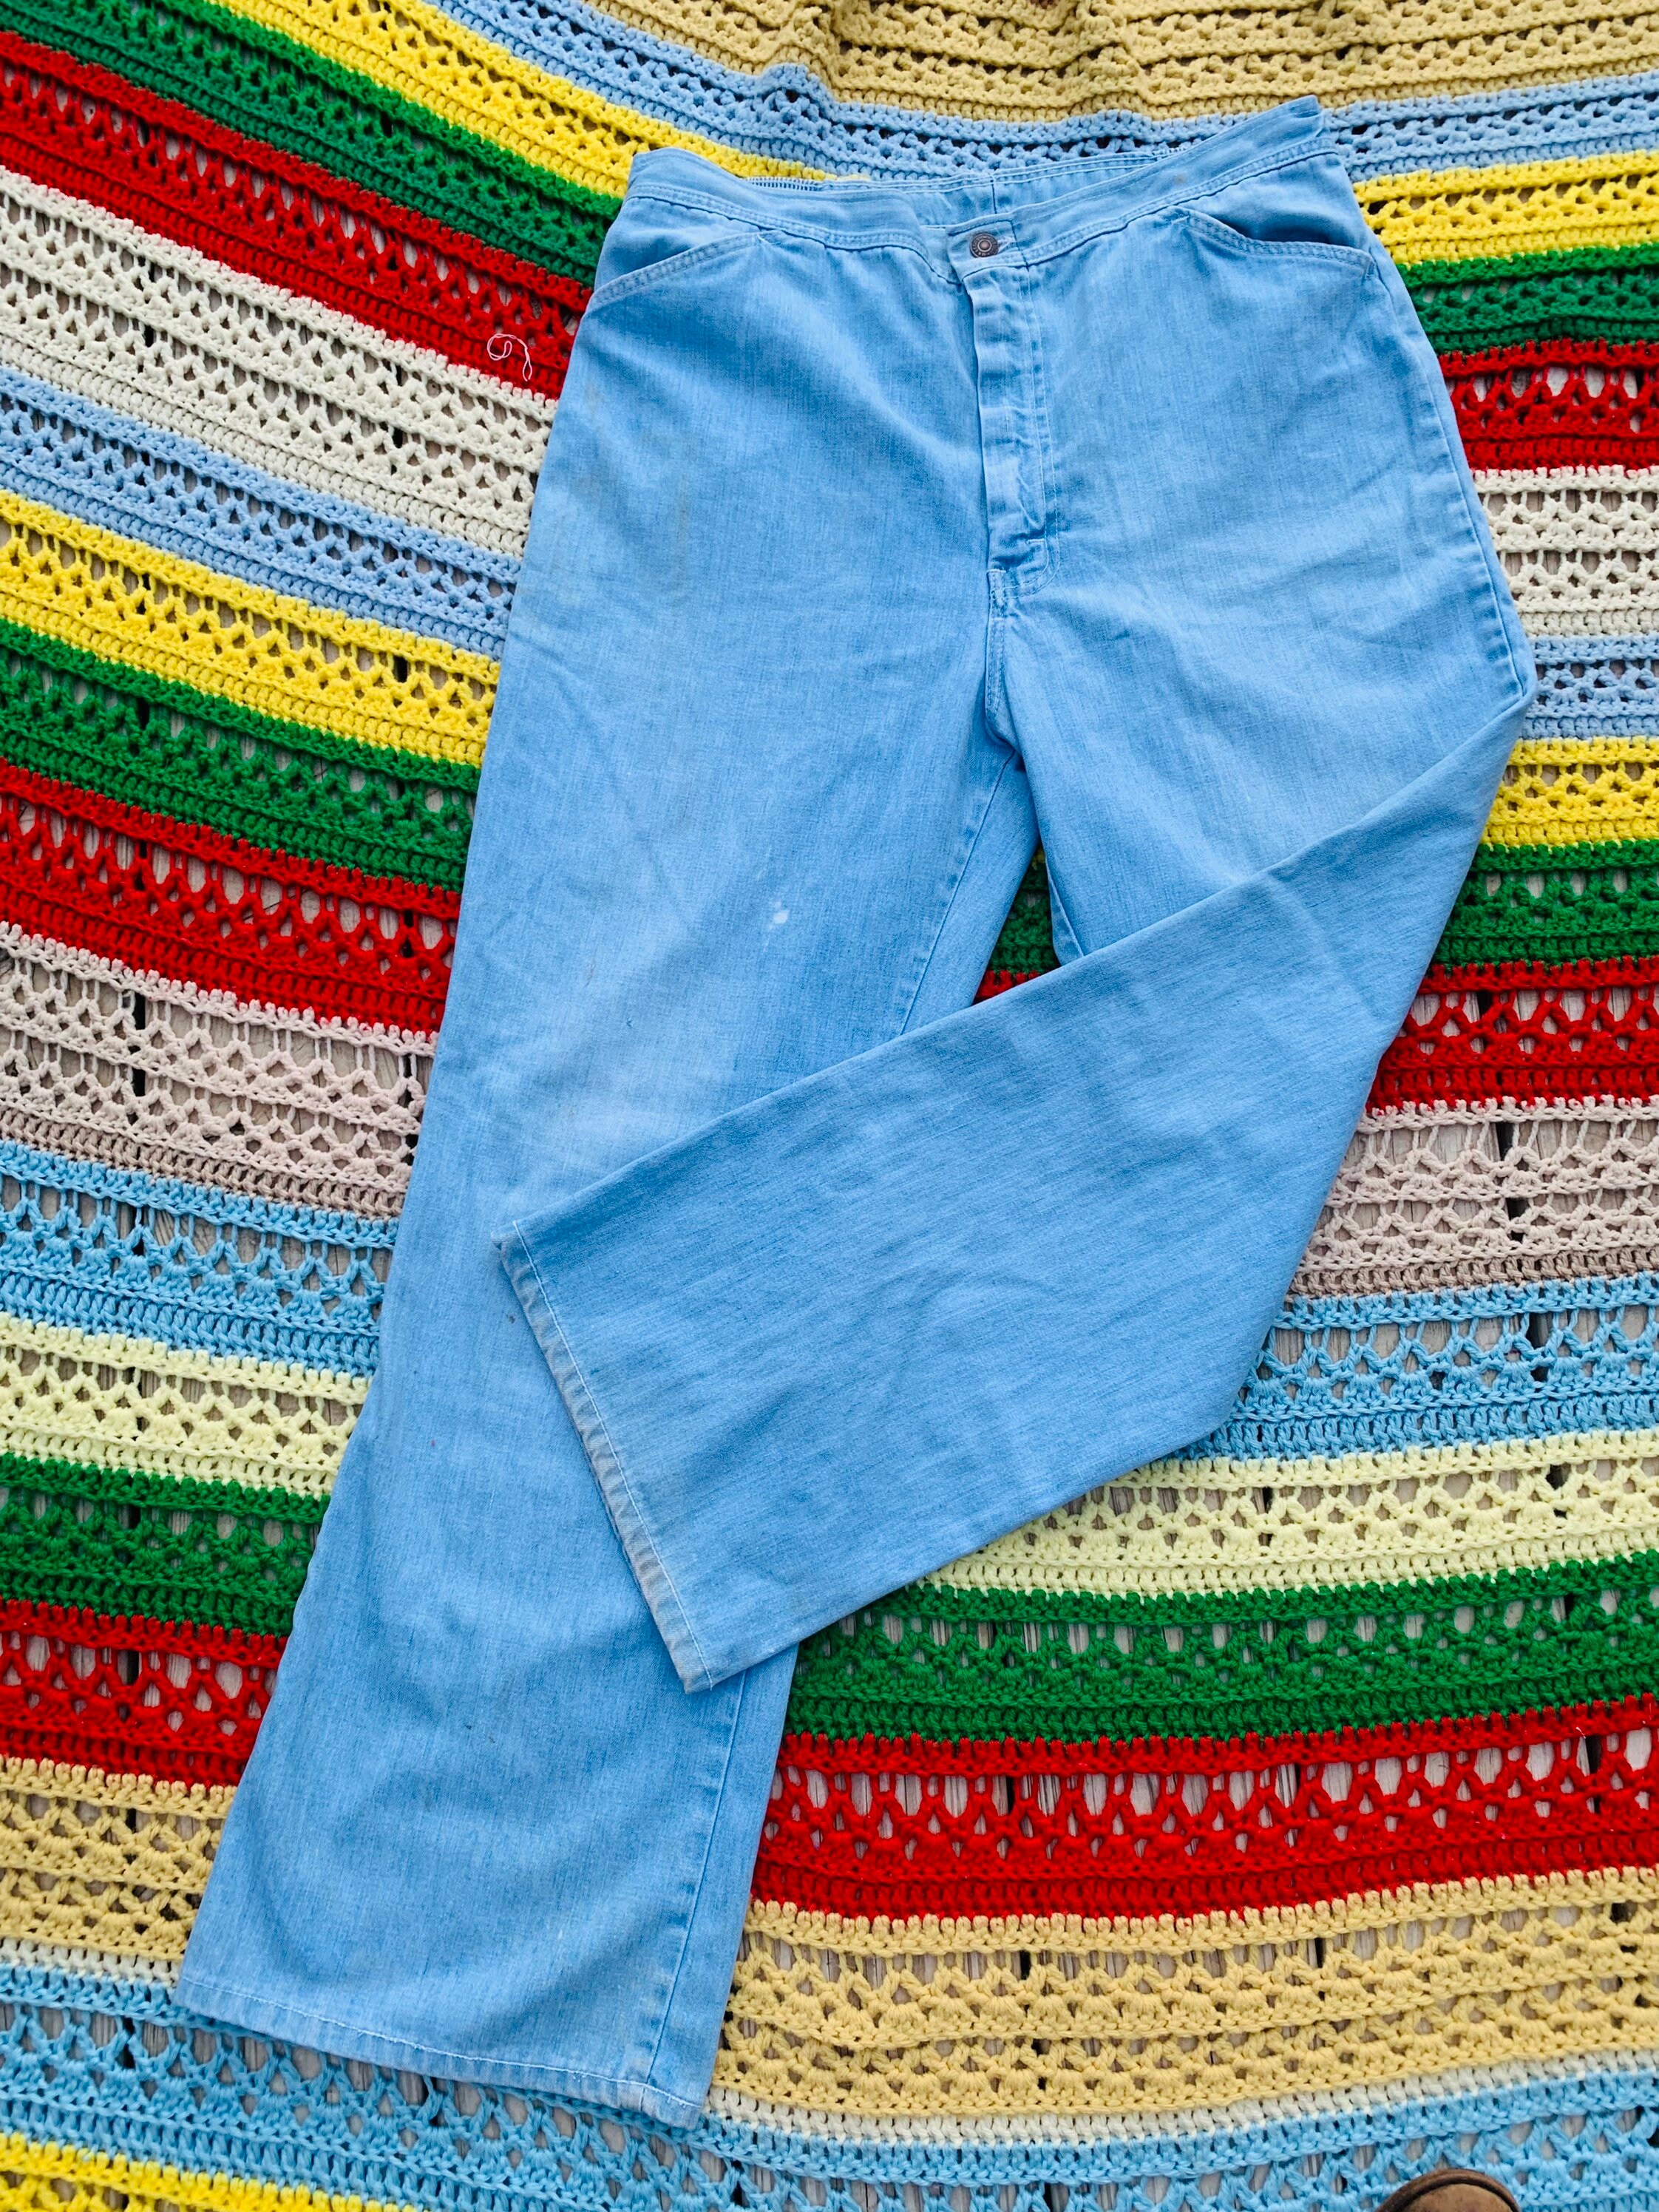 Vintage 1970s Mr. Leggs Brand Blue Denim Jeans. Vintage - Etsy Ireland